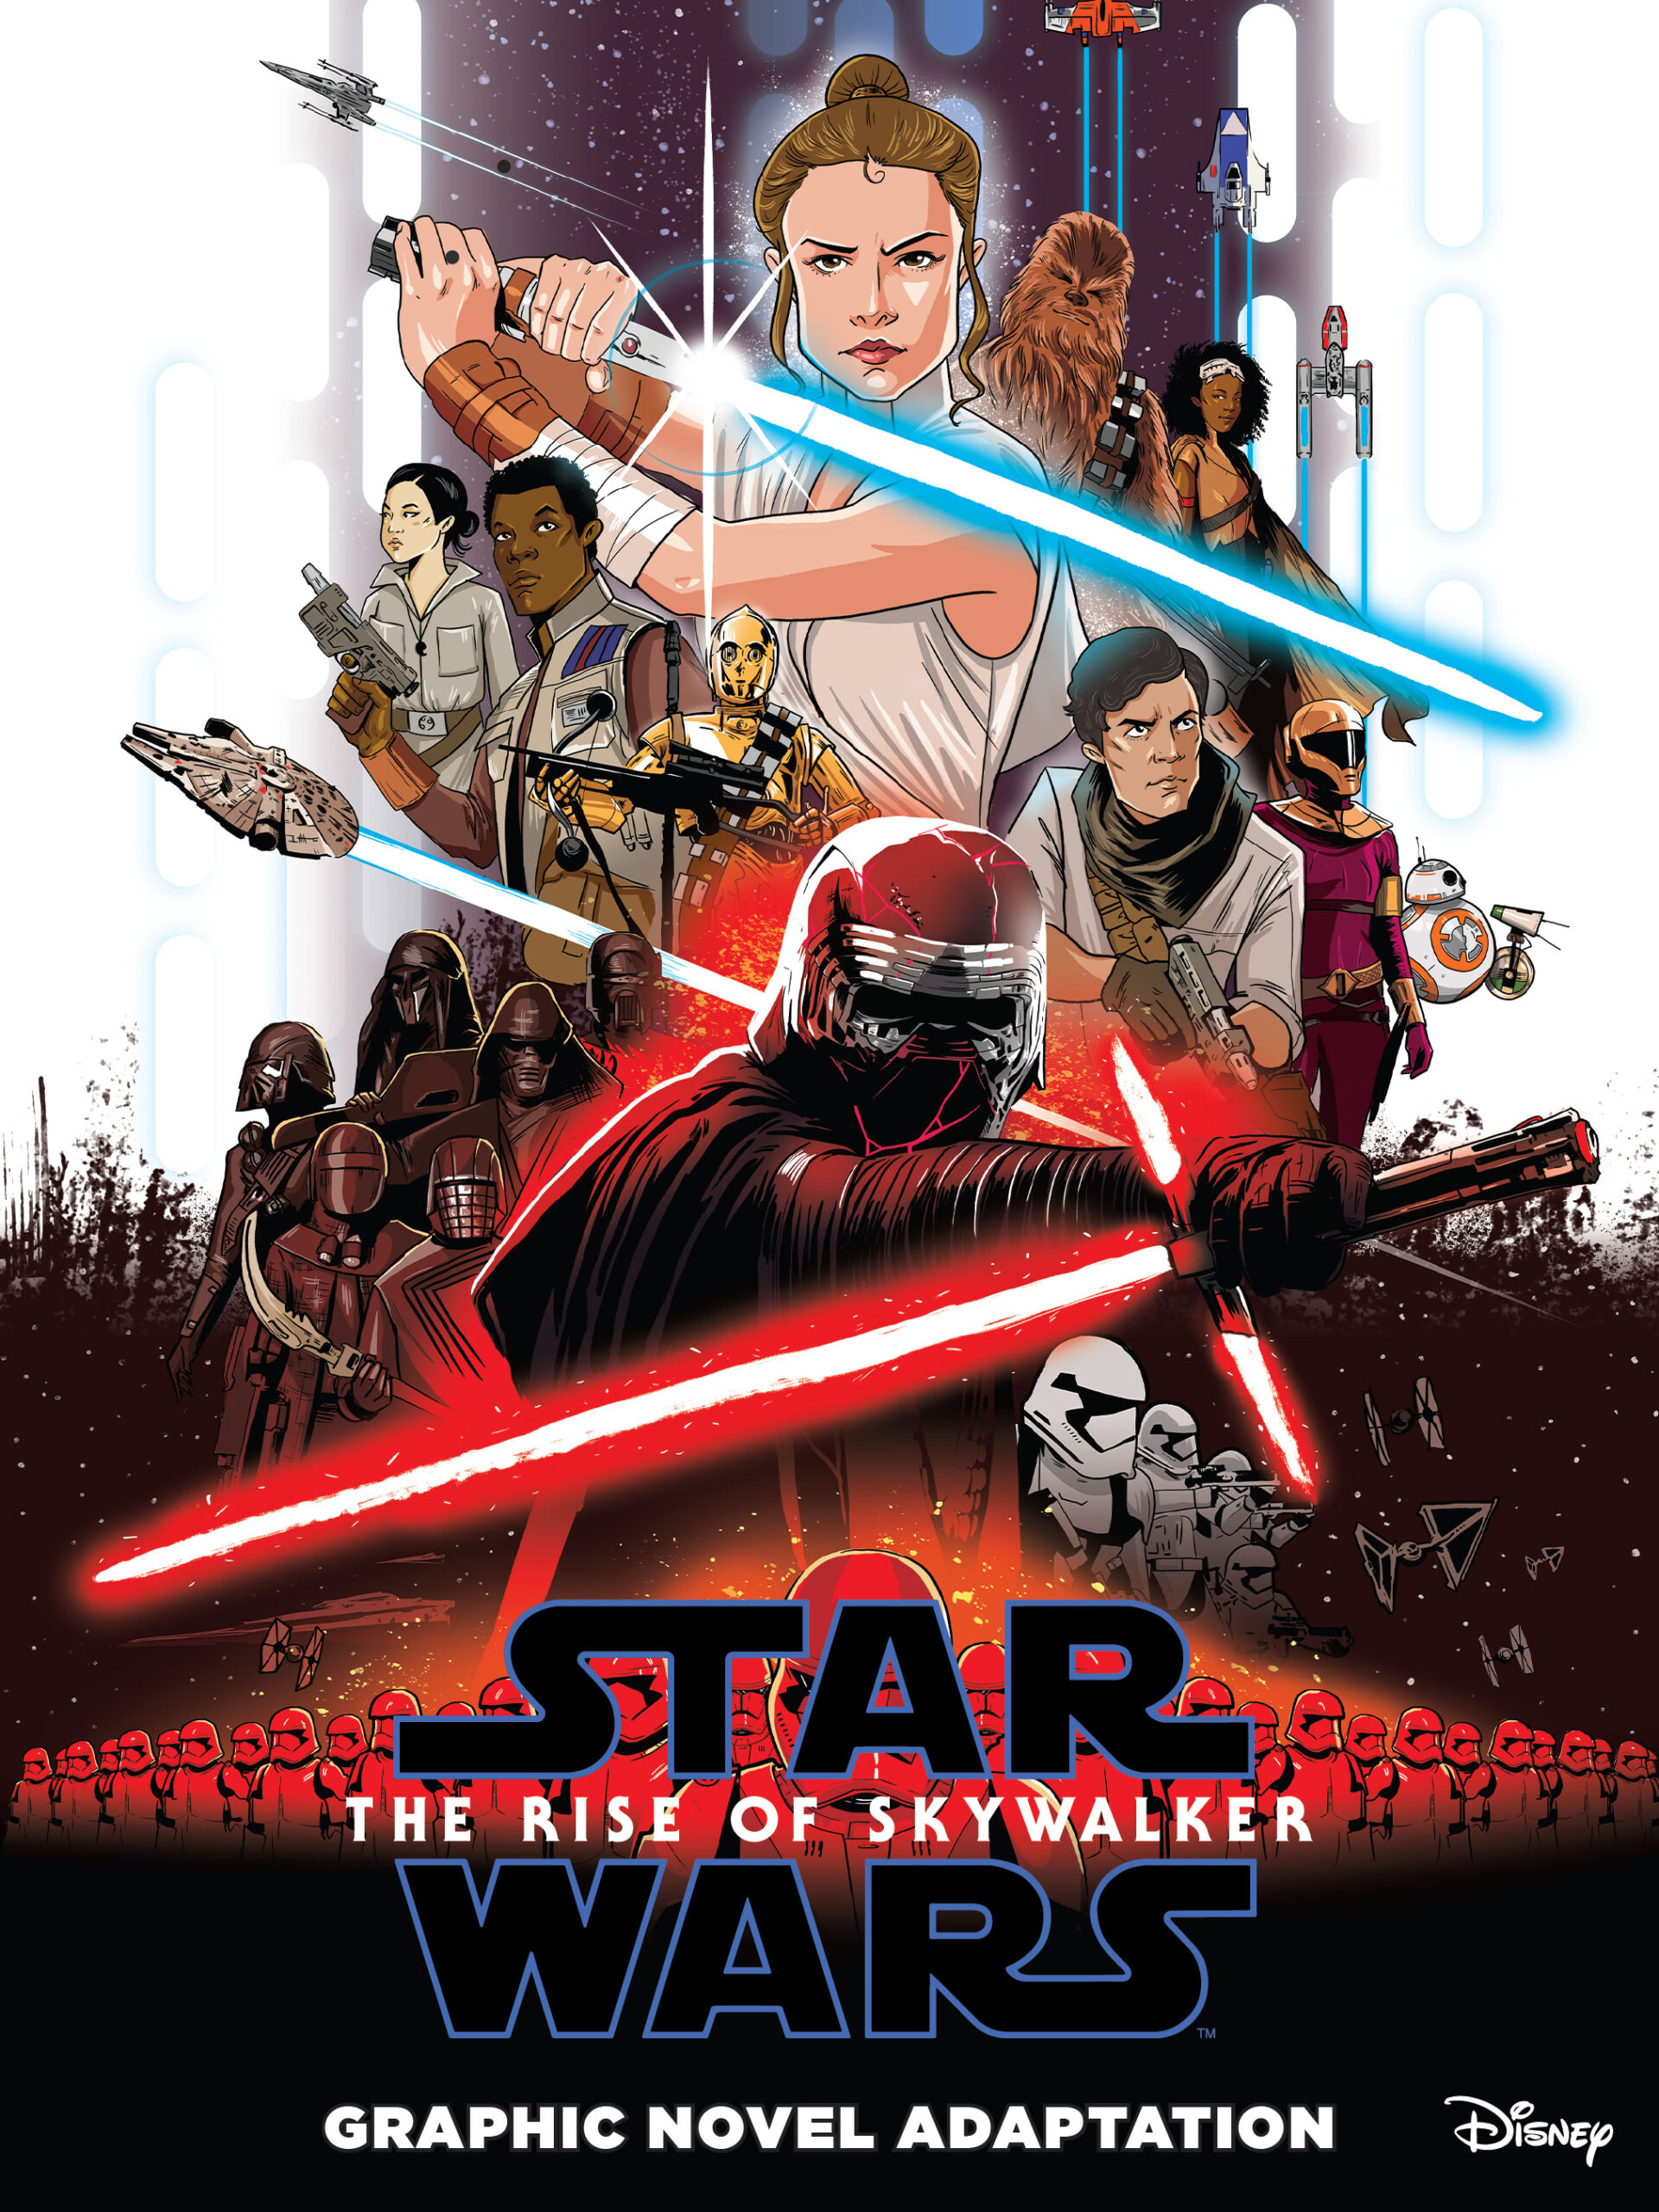 Star Wars – The Rise of Skywalker Graphic Novel Adaptation